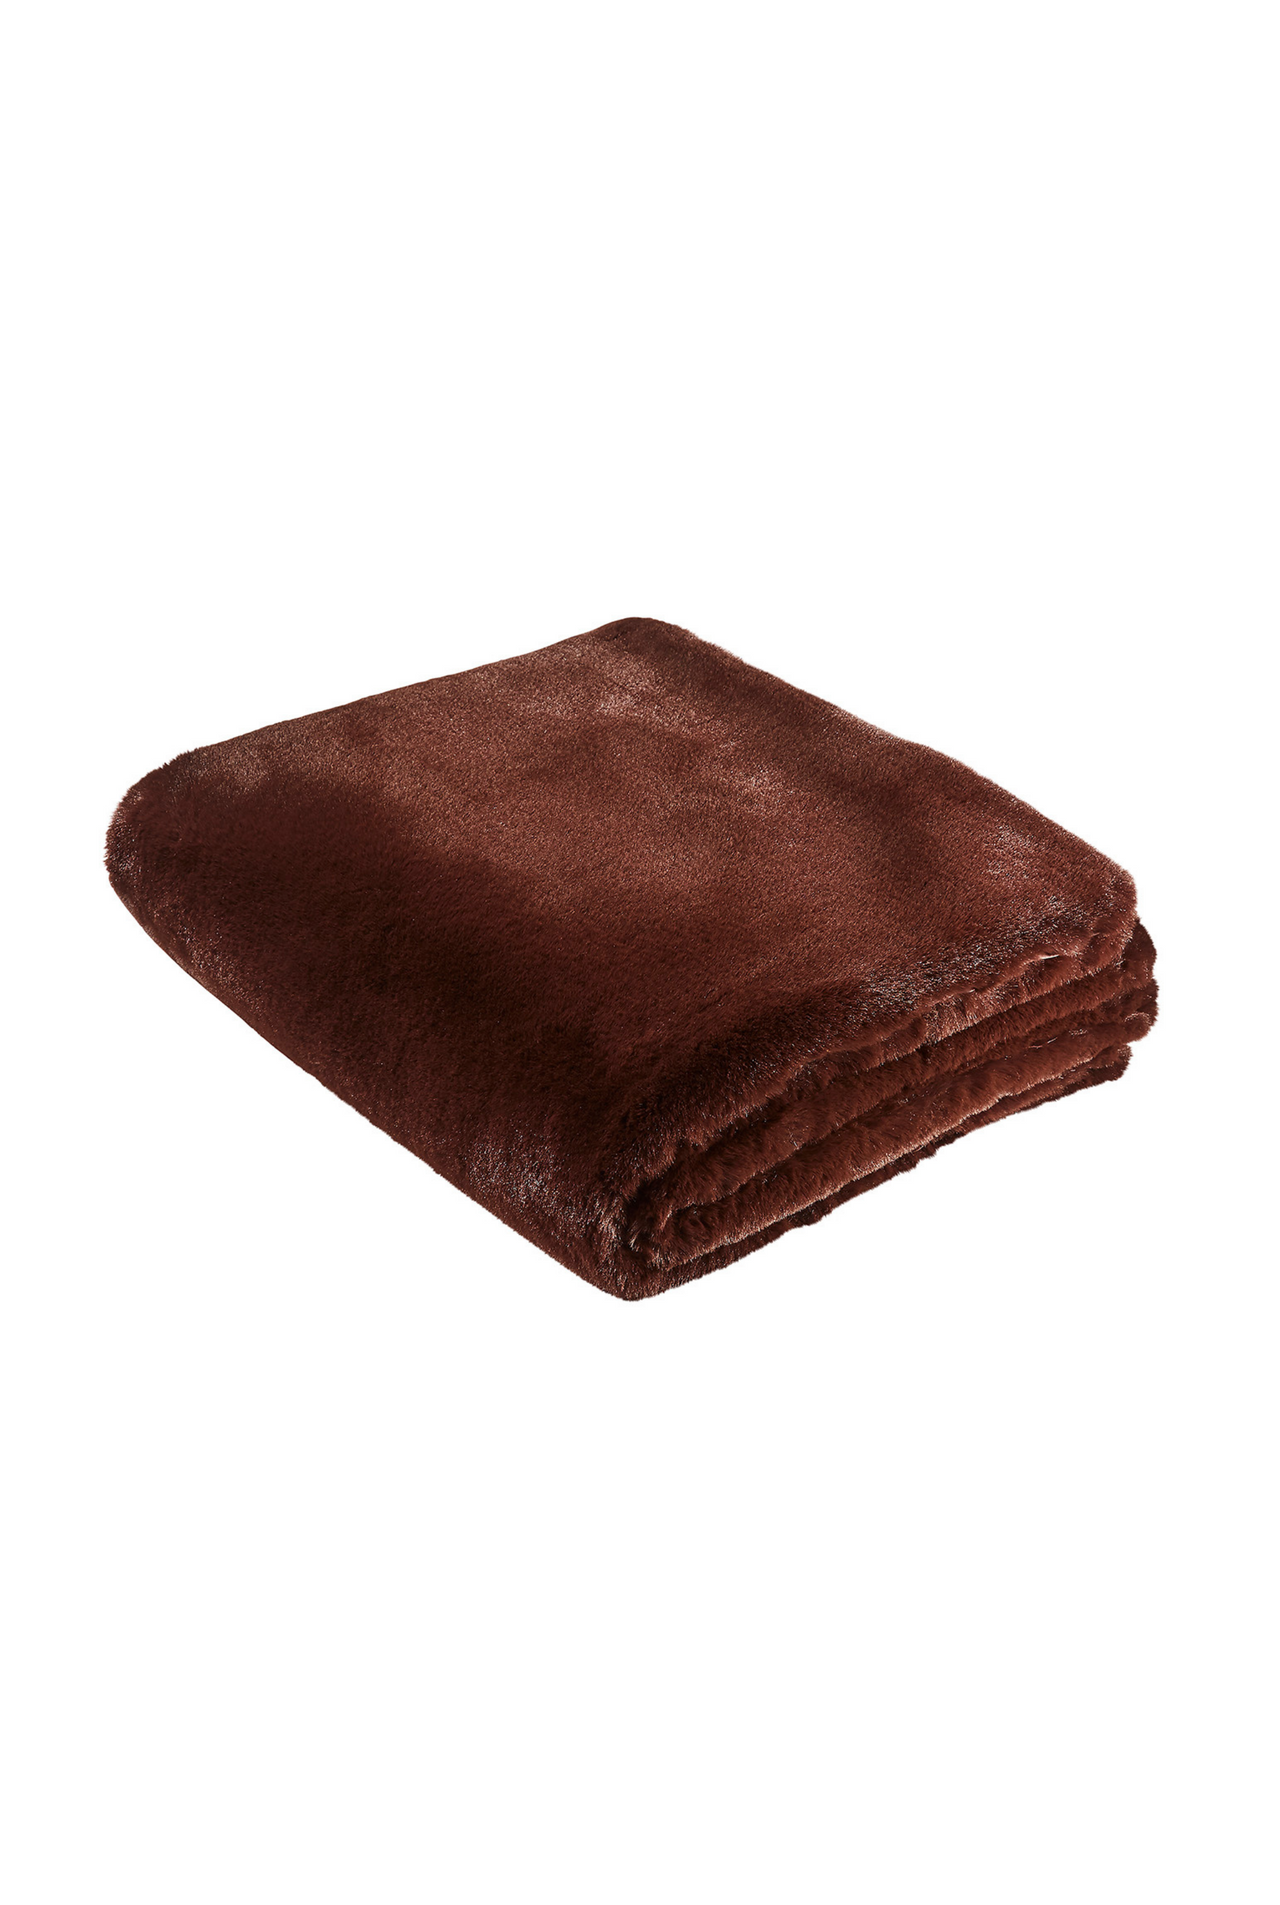 Faux fur throw blanket in chocolate brown.